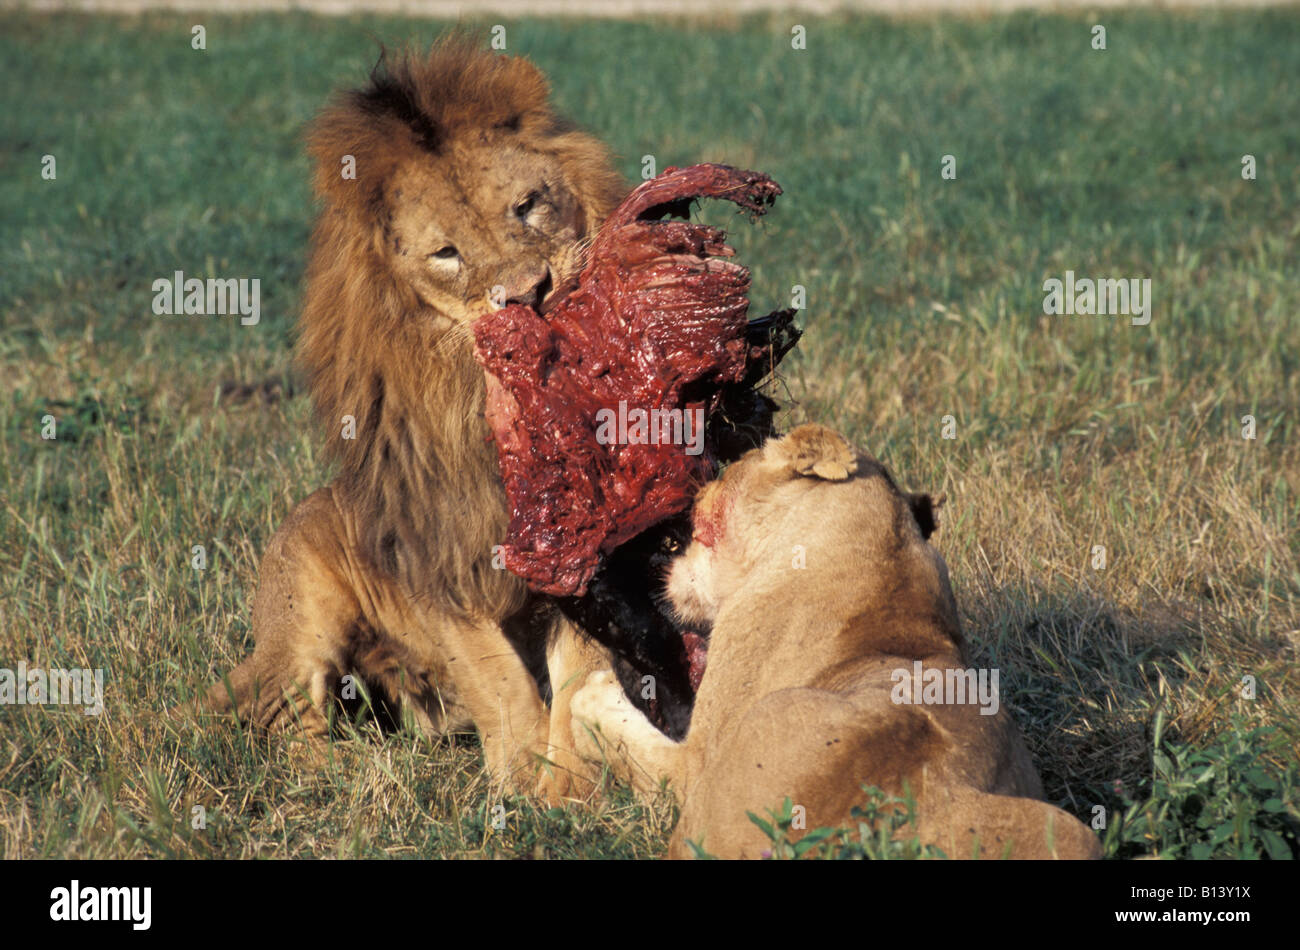 lions-eat-a-loot-animal-panthera-leo-animals-carnivore-hunt-settles-B13Y1X.jpg